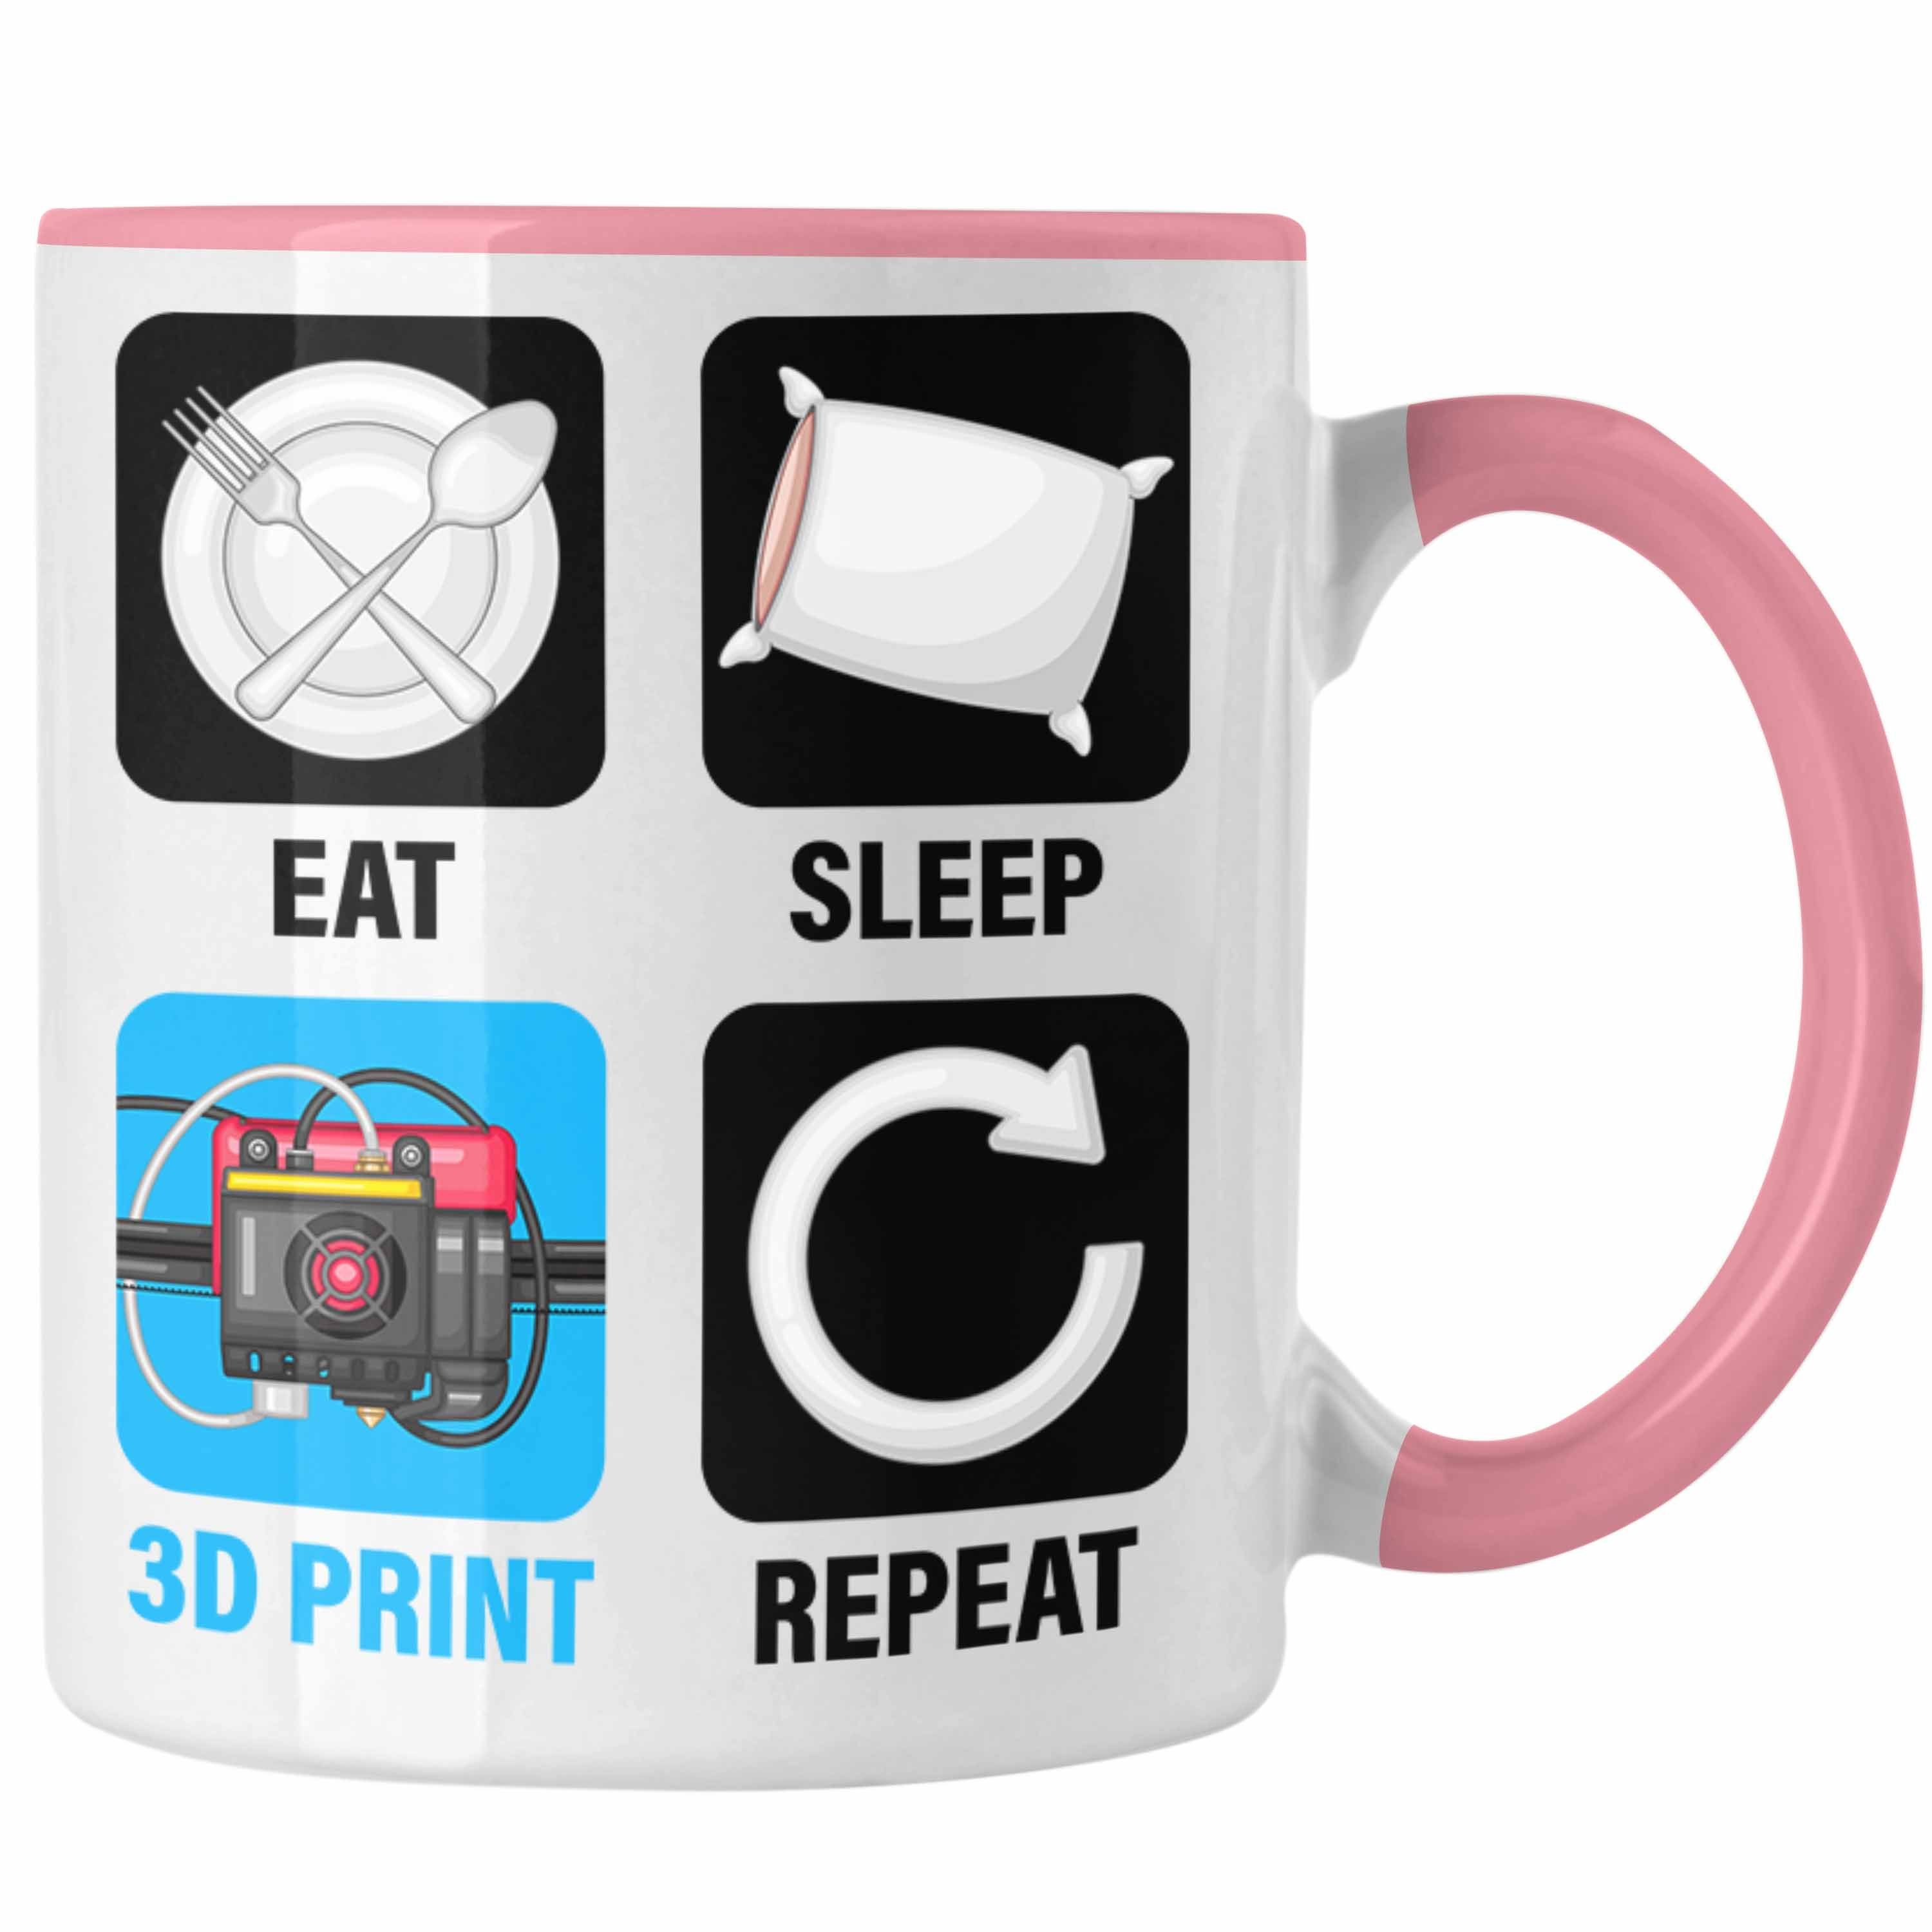 Mä 3D 3D Sleep Print Tasse Eat Printing Drucker für Trendation Repeat 3D Tasse Geschenk Rosa